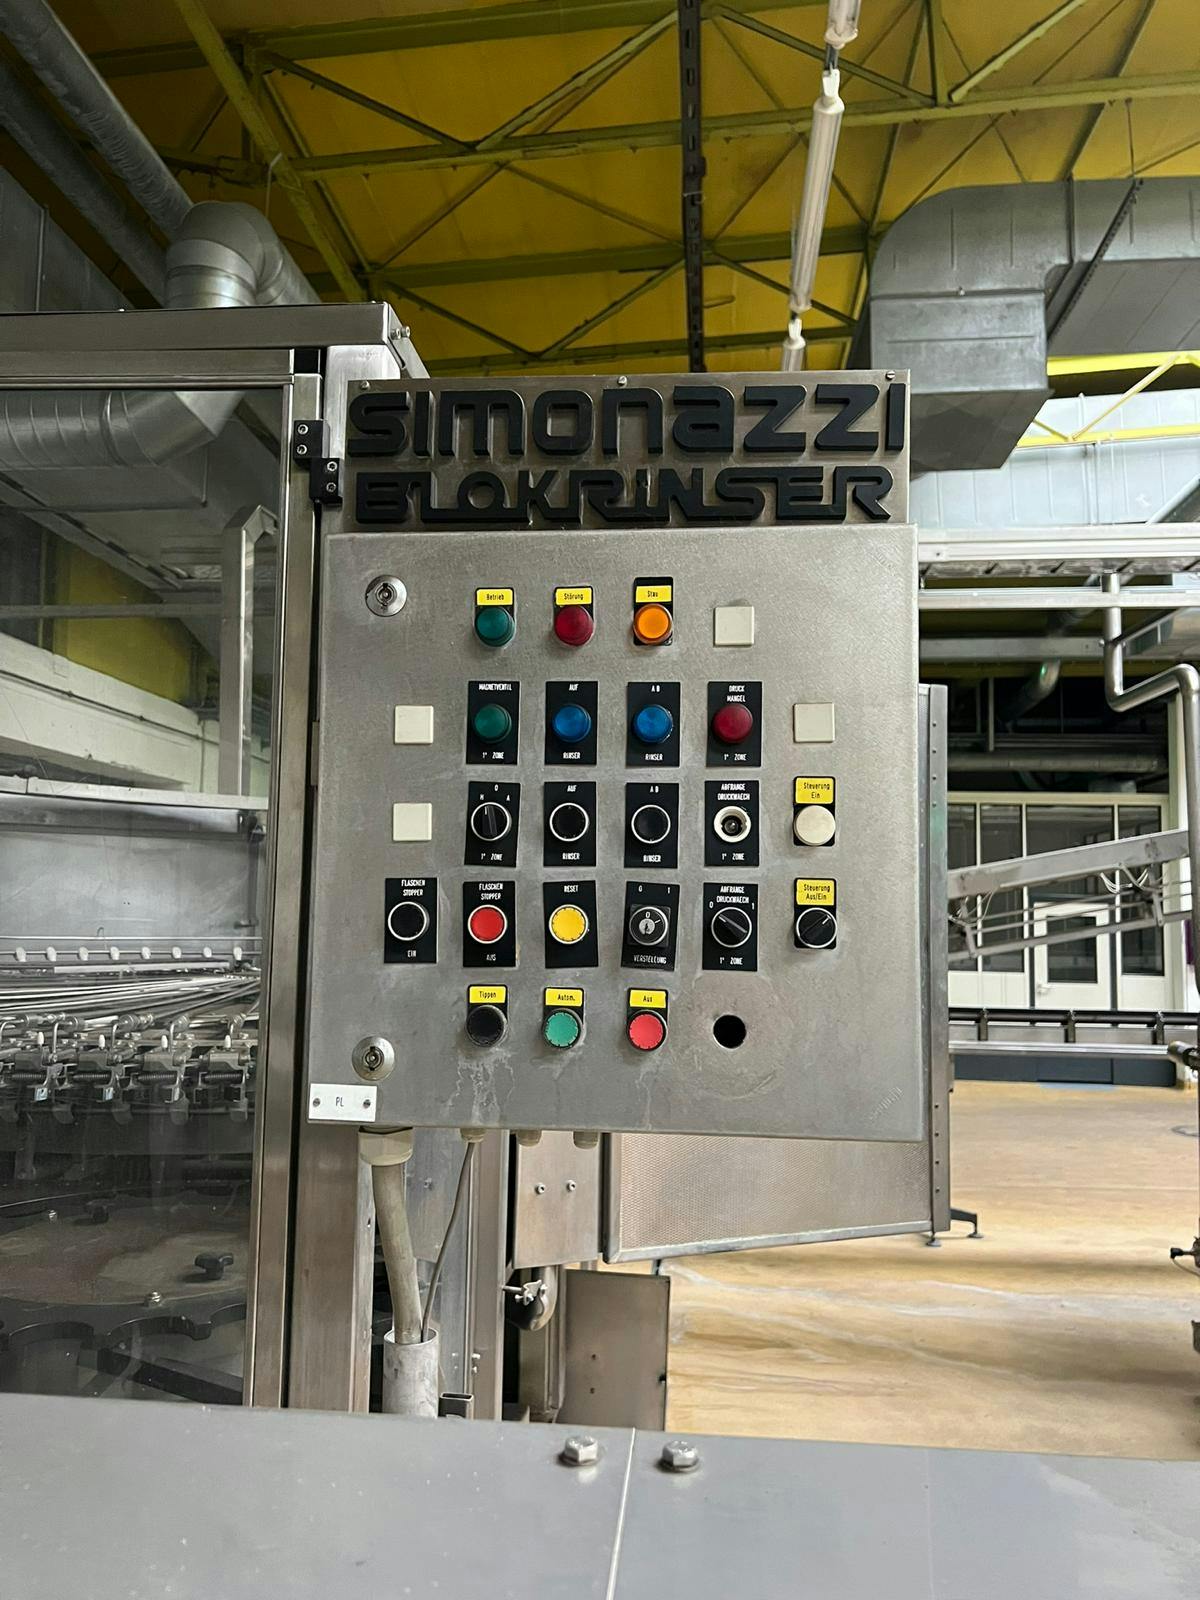 Control unit of Simonazzi LGH 684